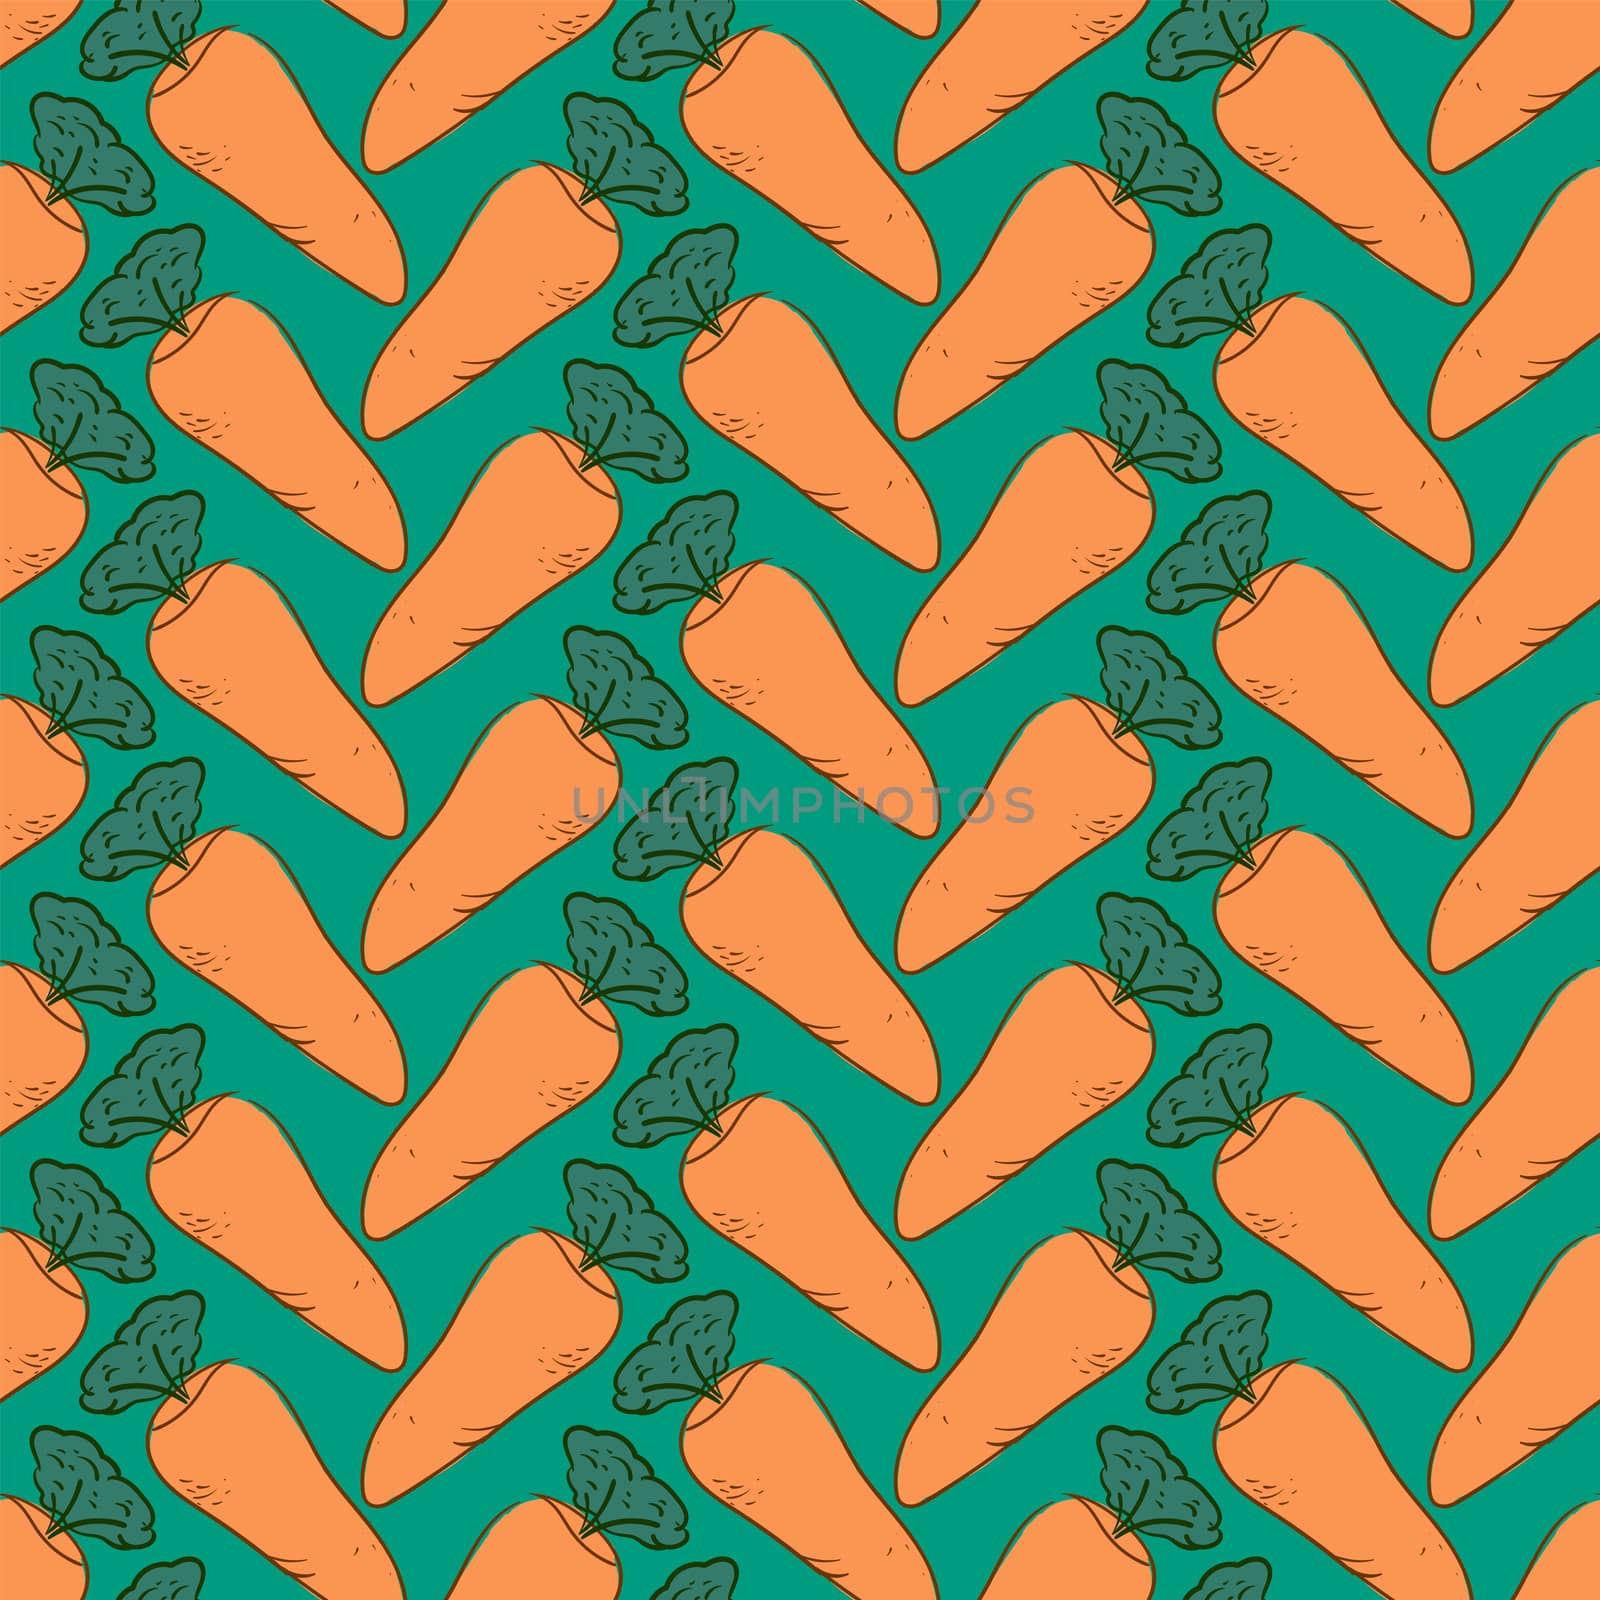 Carrots pattern , illustration, vector on white background